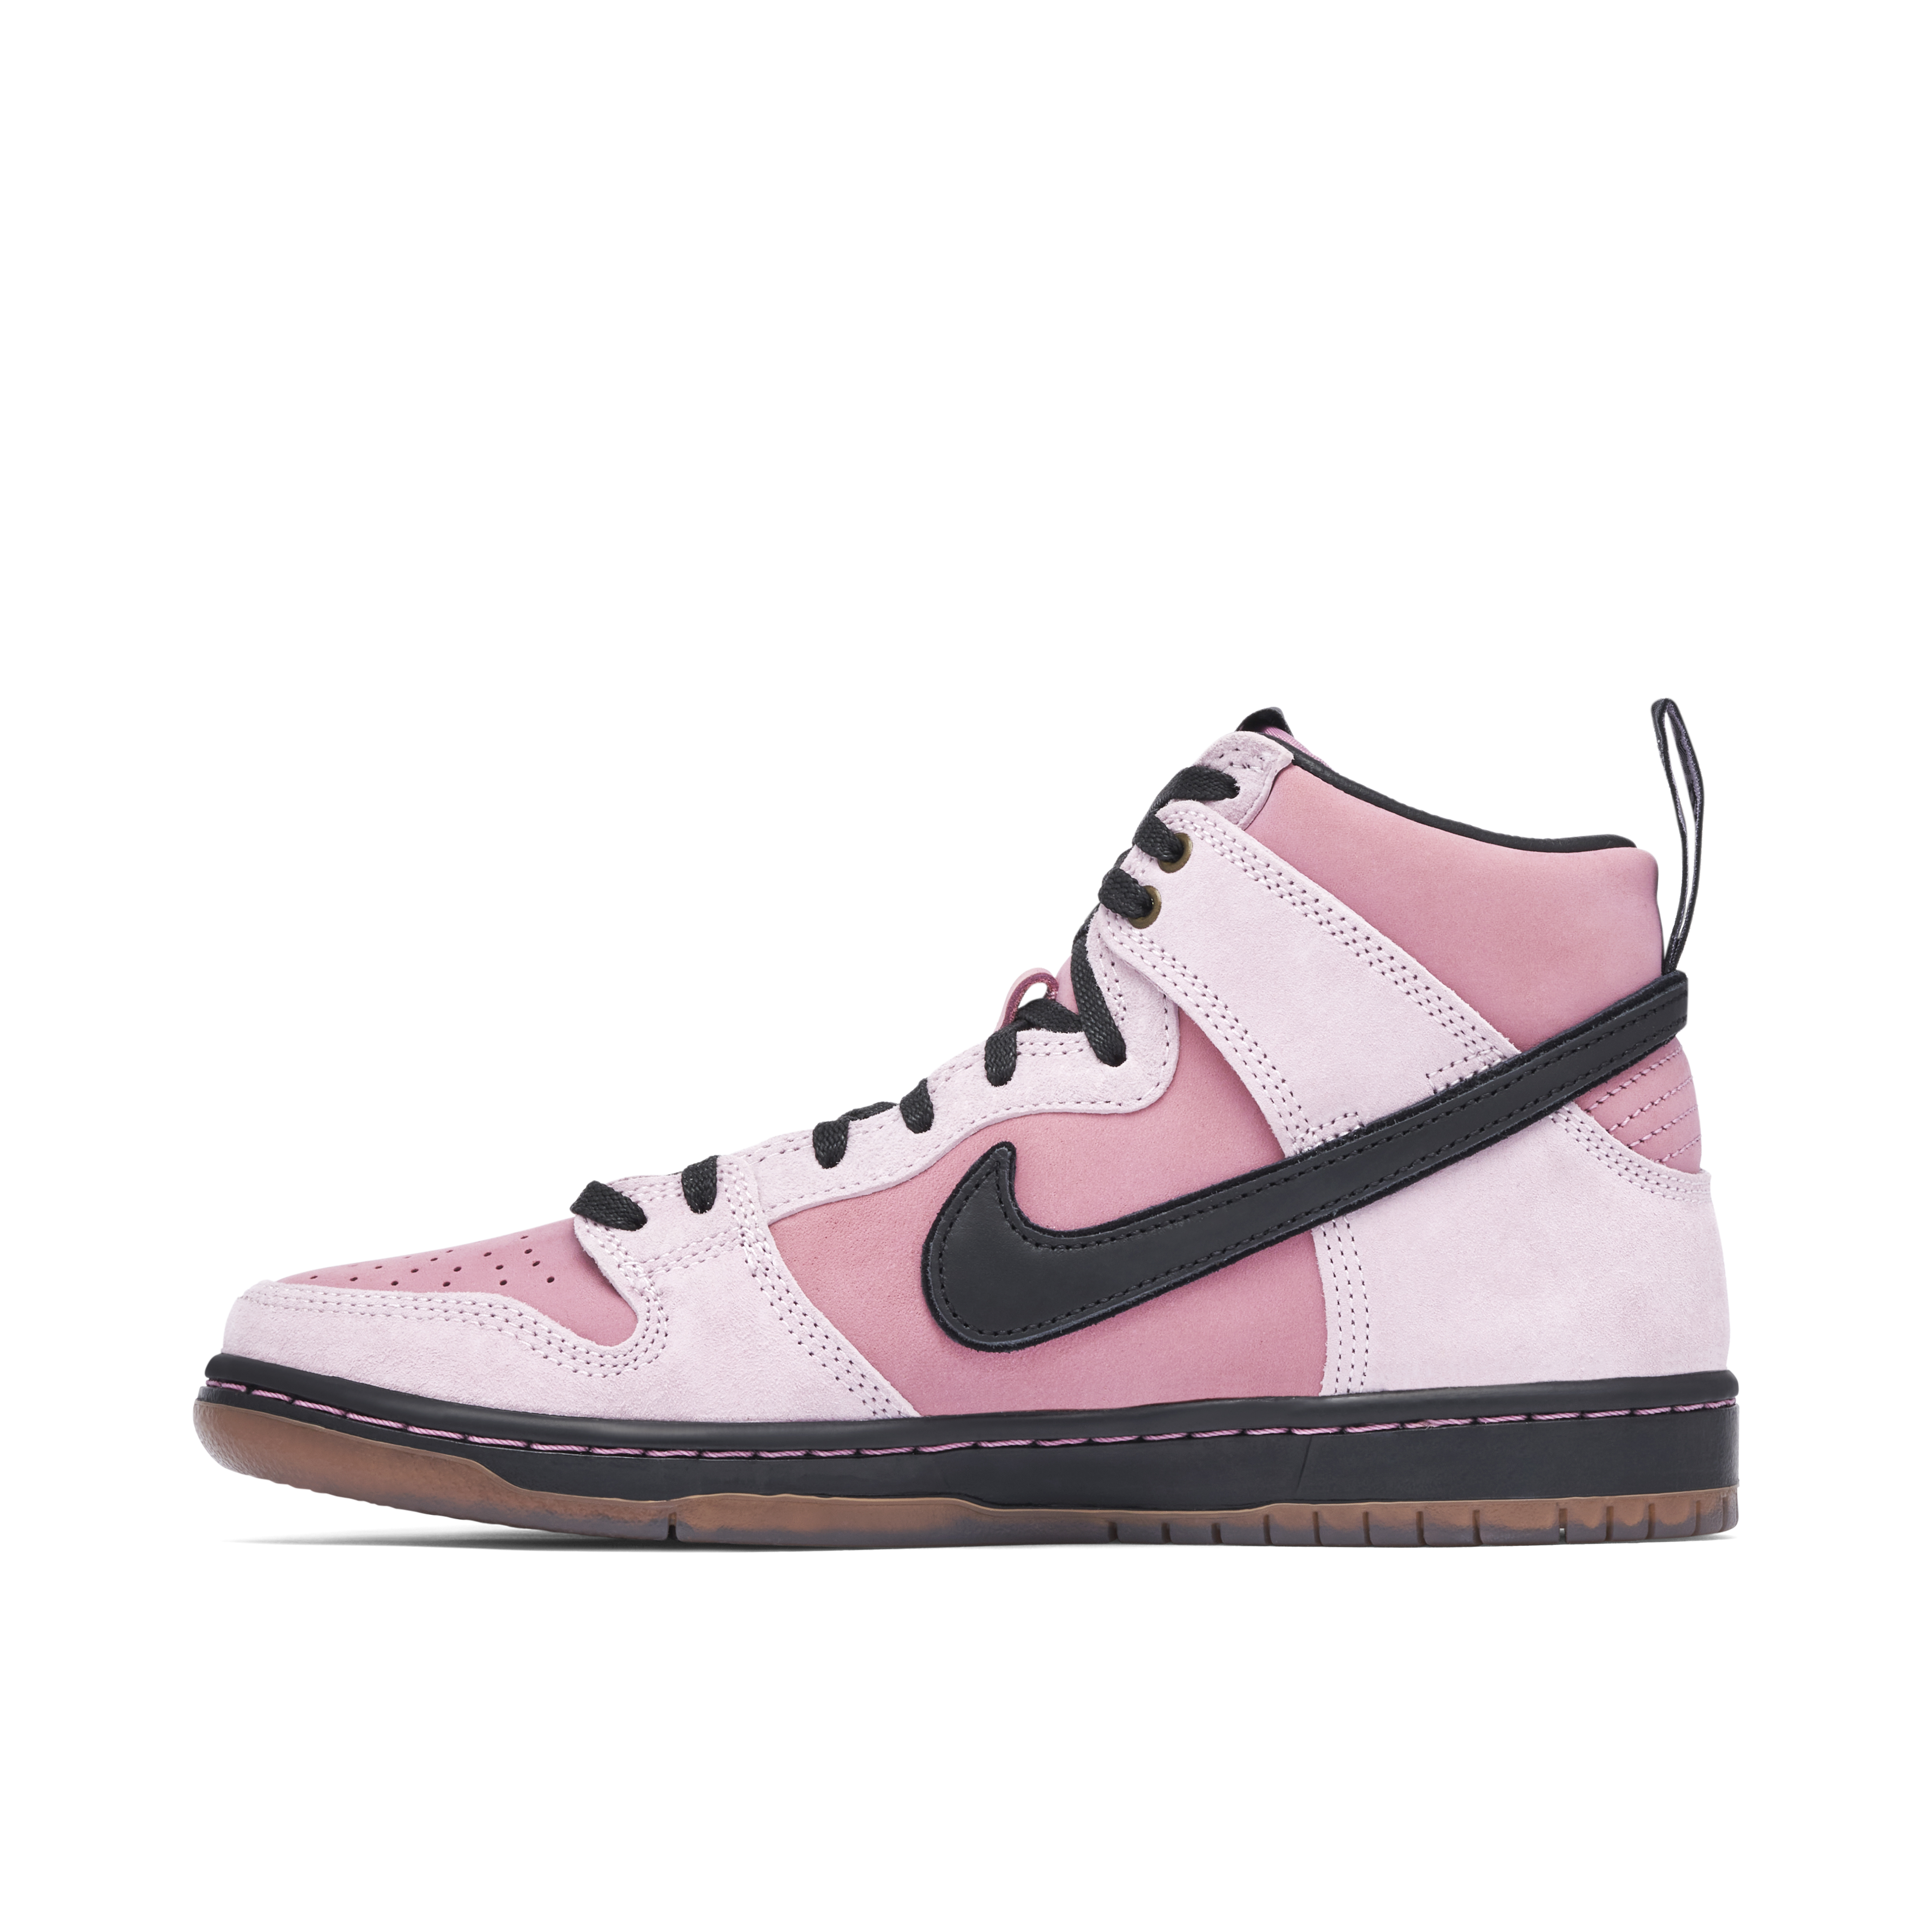 KCDC x Nike Dunk High SB Pink | DH7742-600 | Laced